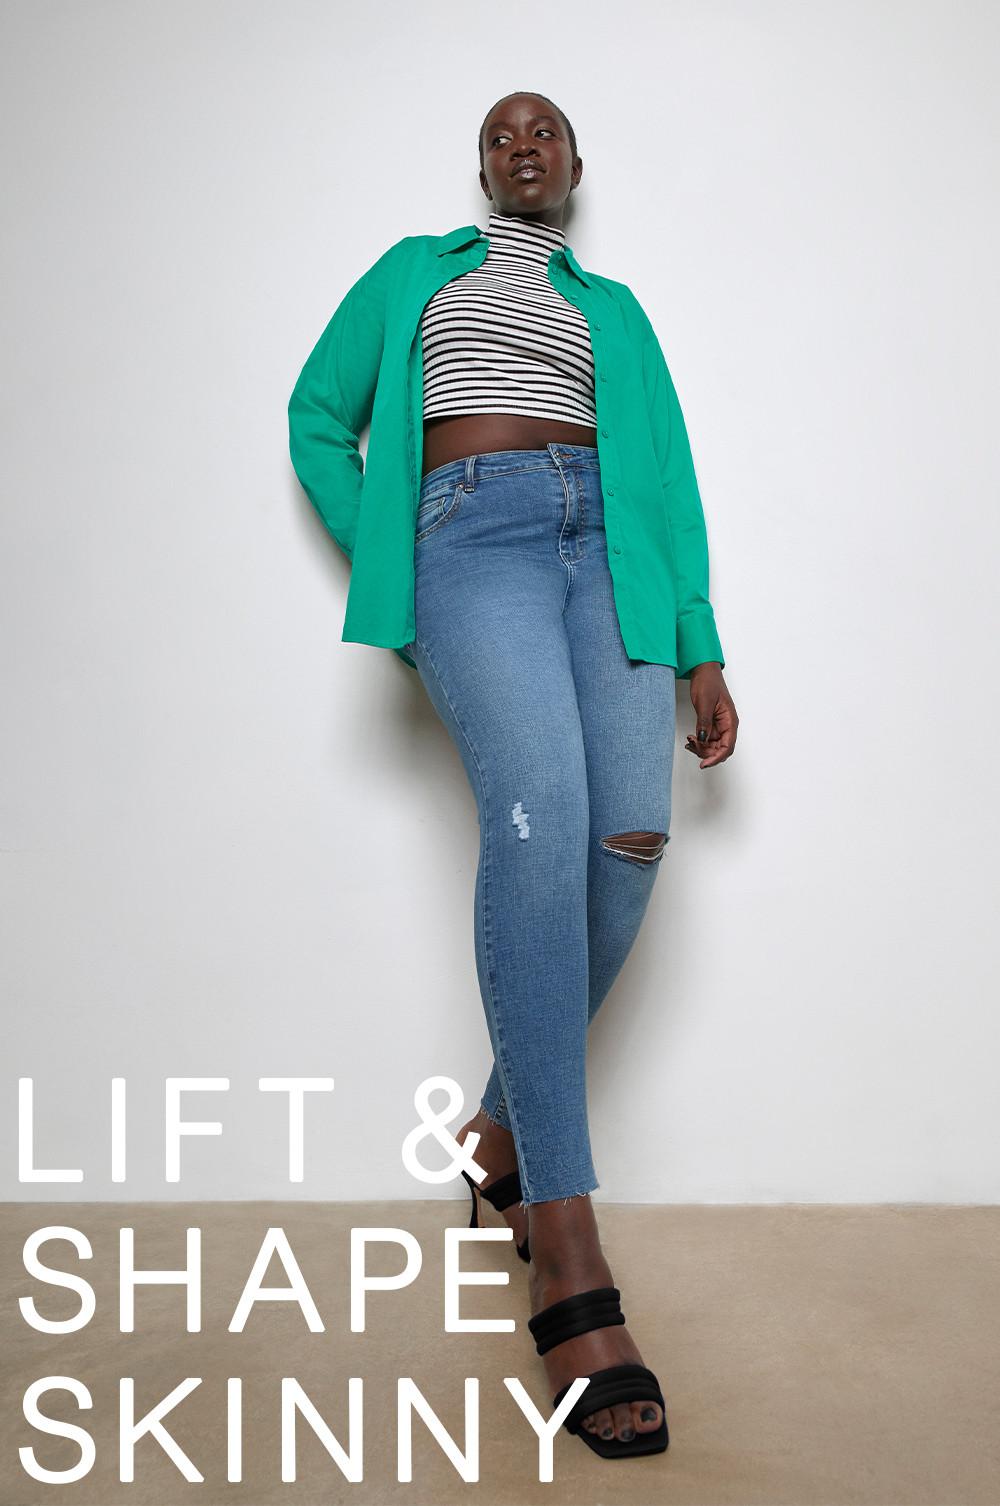 The Lift &amp; Shape Skinny Jean